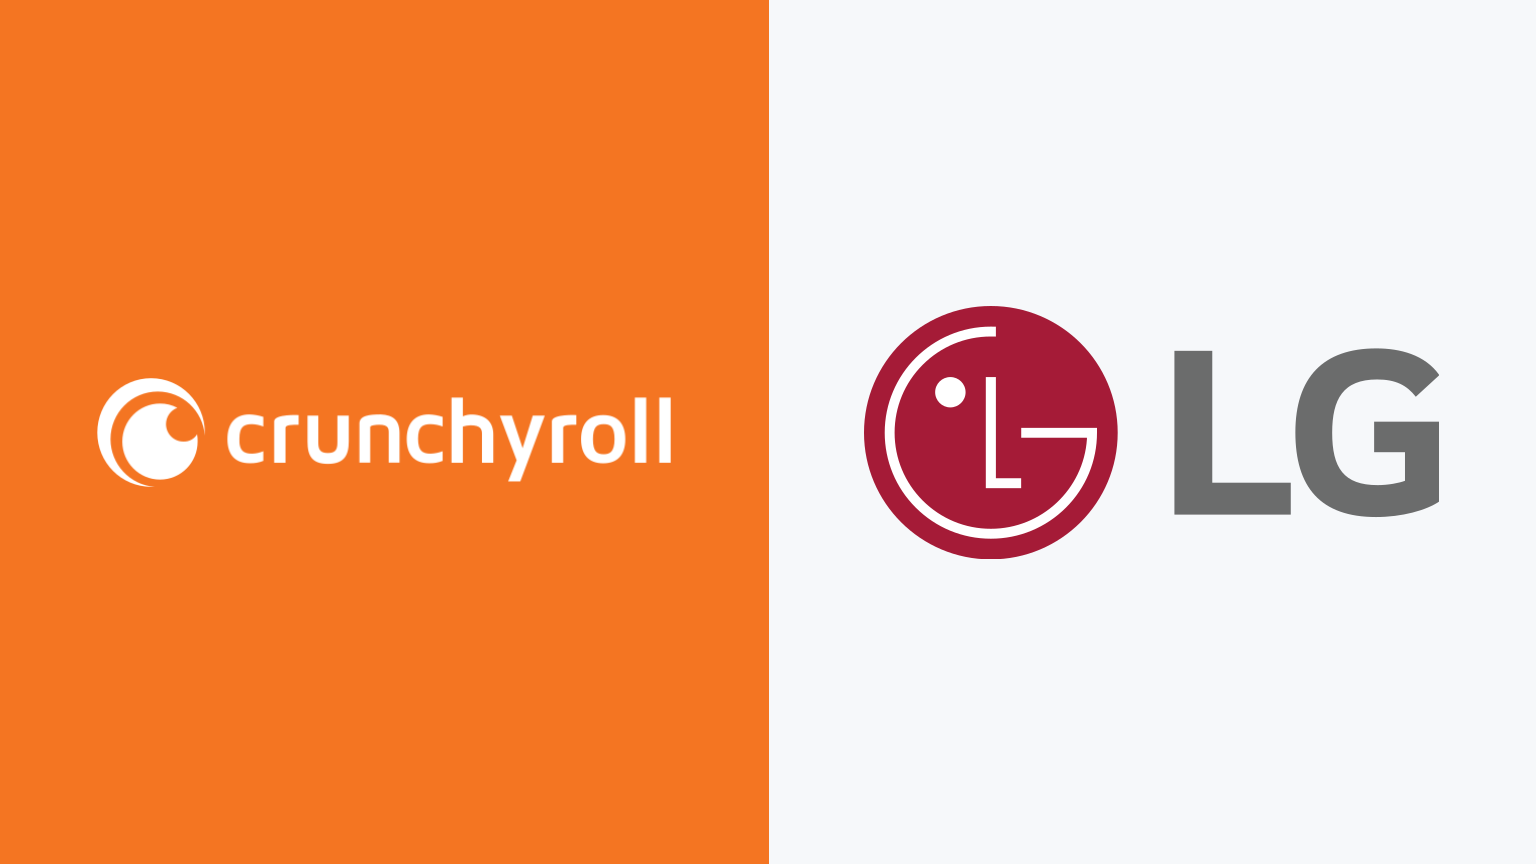 How To Watch Crunchyroll On Lg Smart Tv